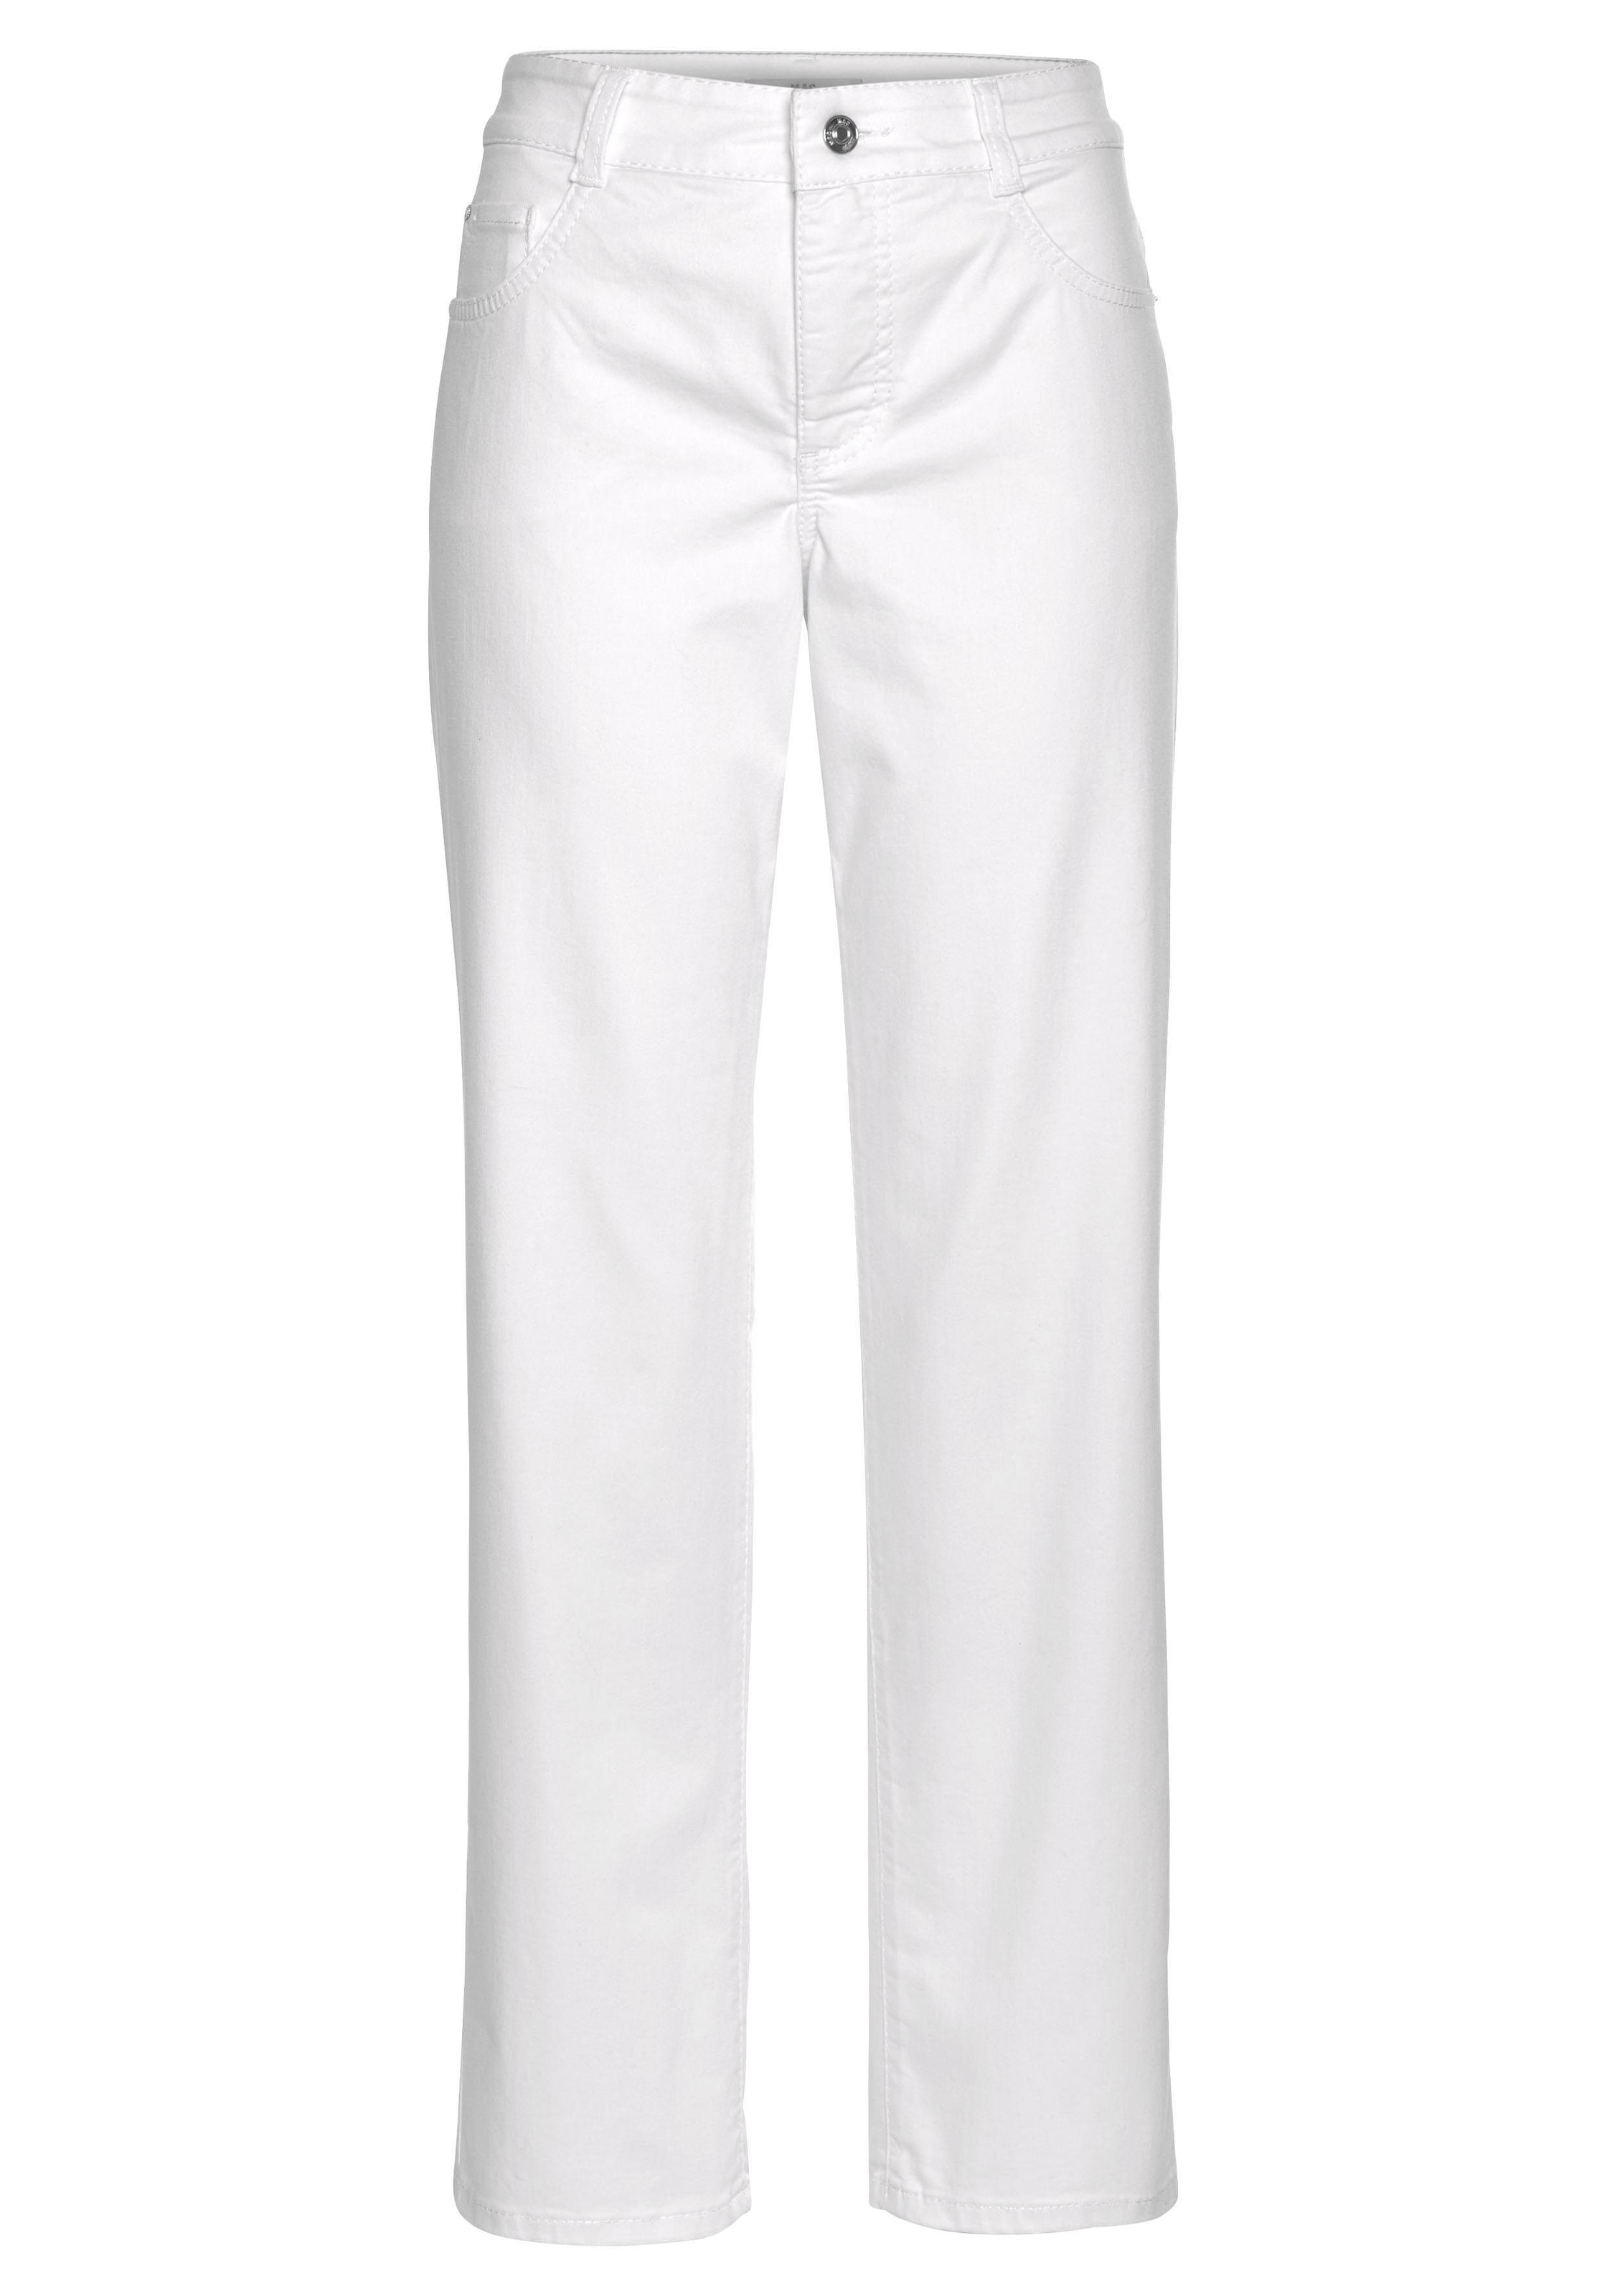 Bequeme fit MAC Passform »Gracia«, feminine Jeans